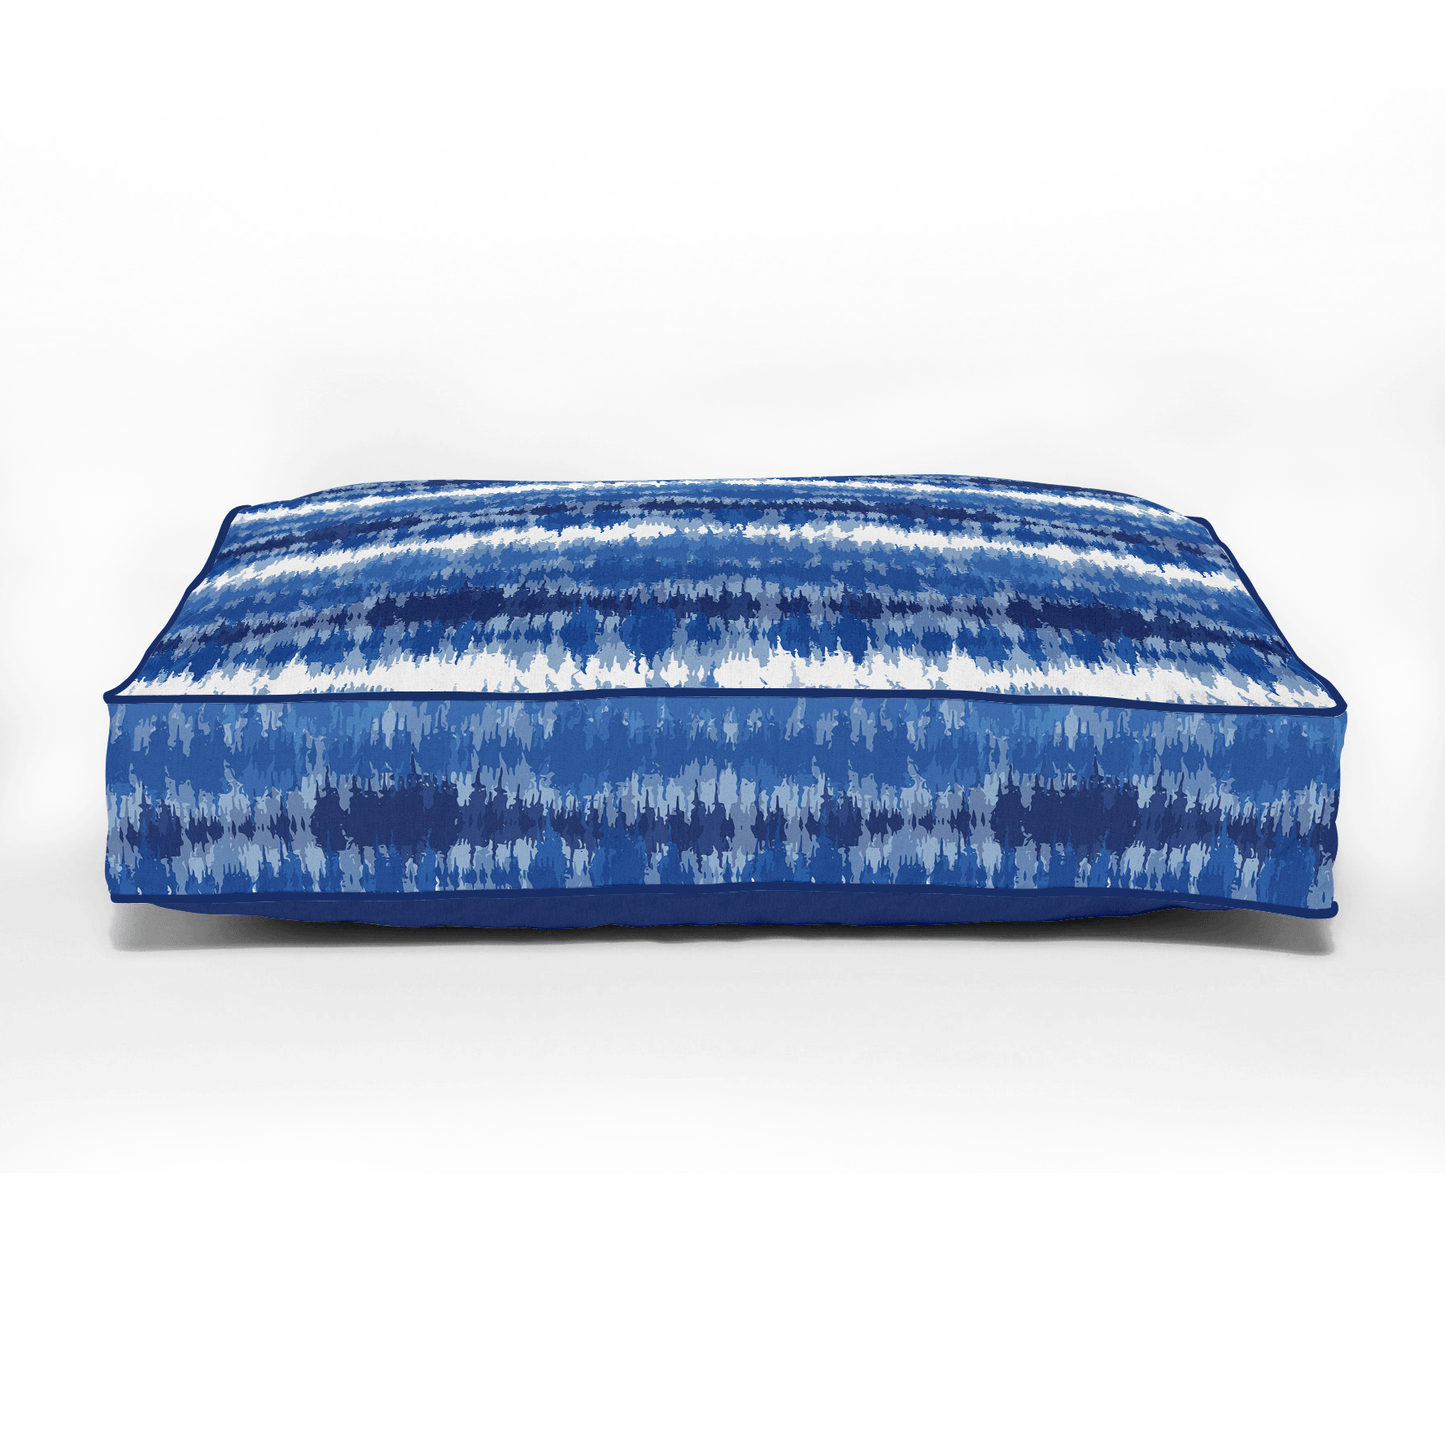 blue white dog bed patterned dog bed durable chic stylish dog bed